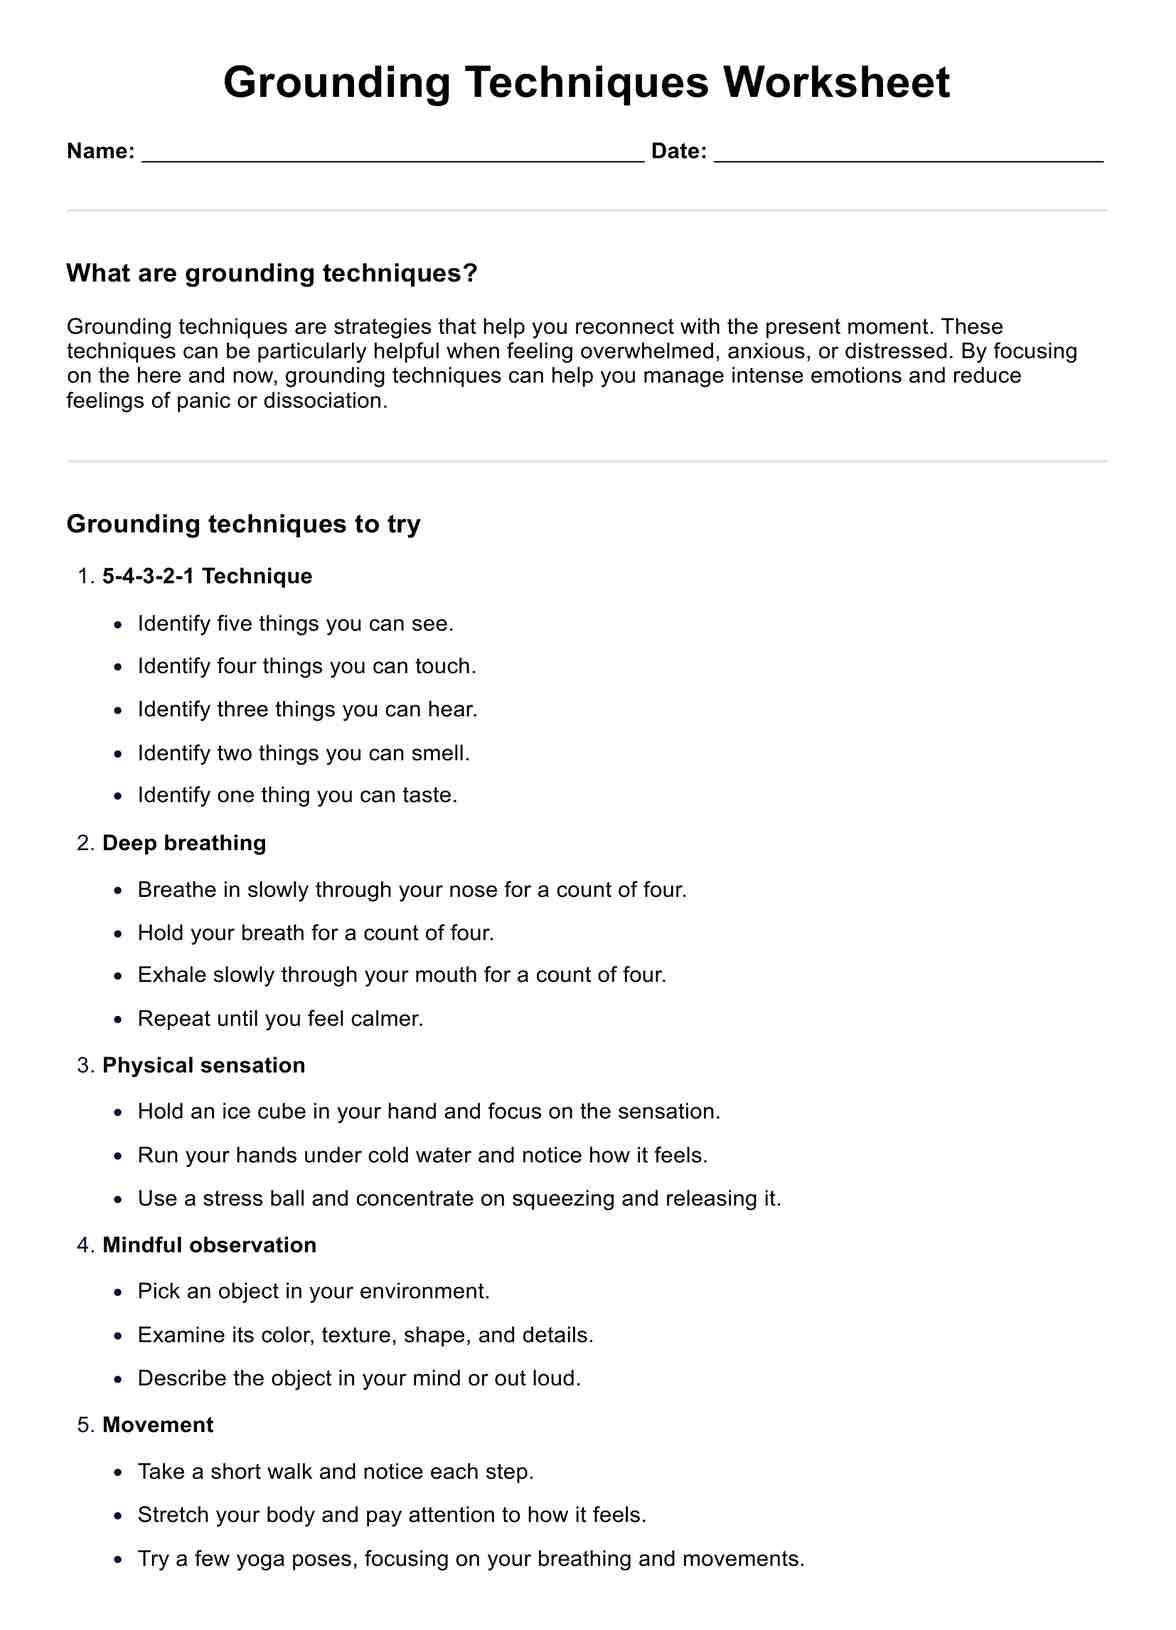 Grounding Worksheet PDF Example